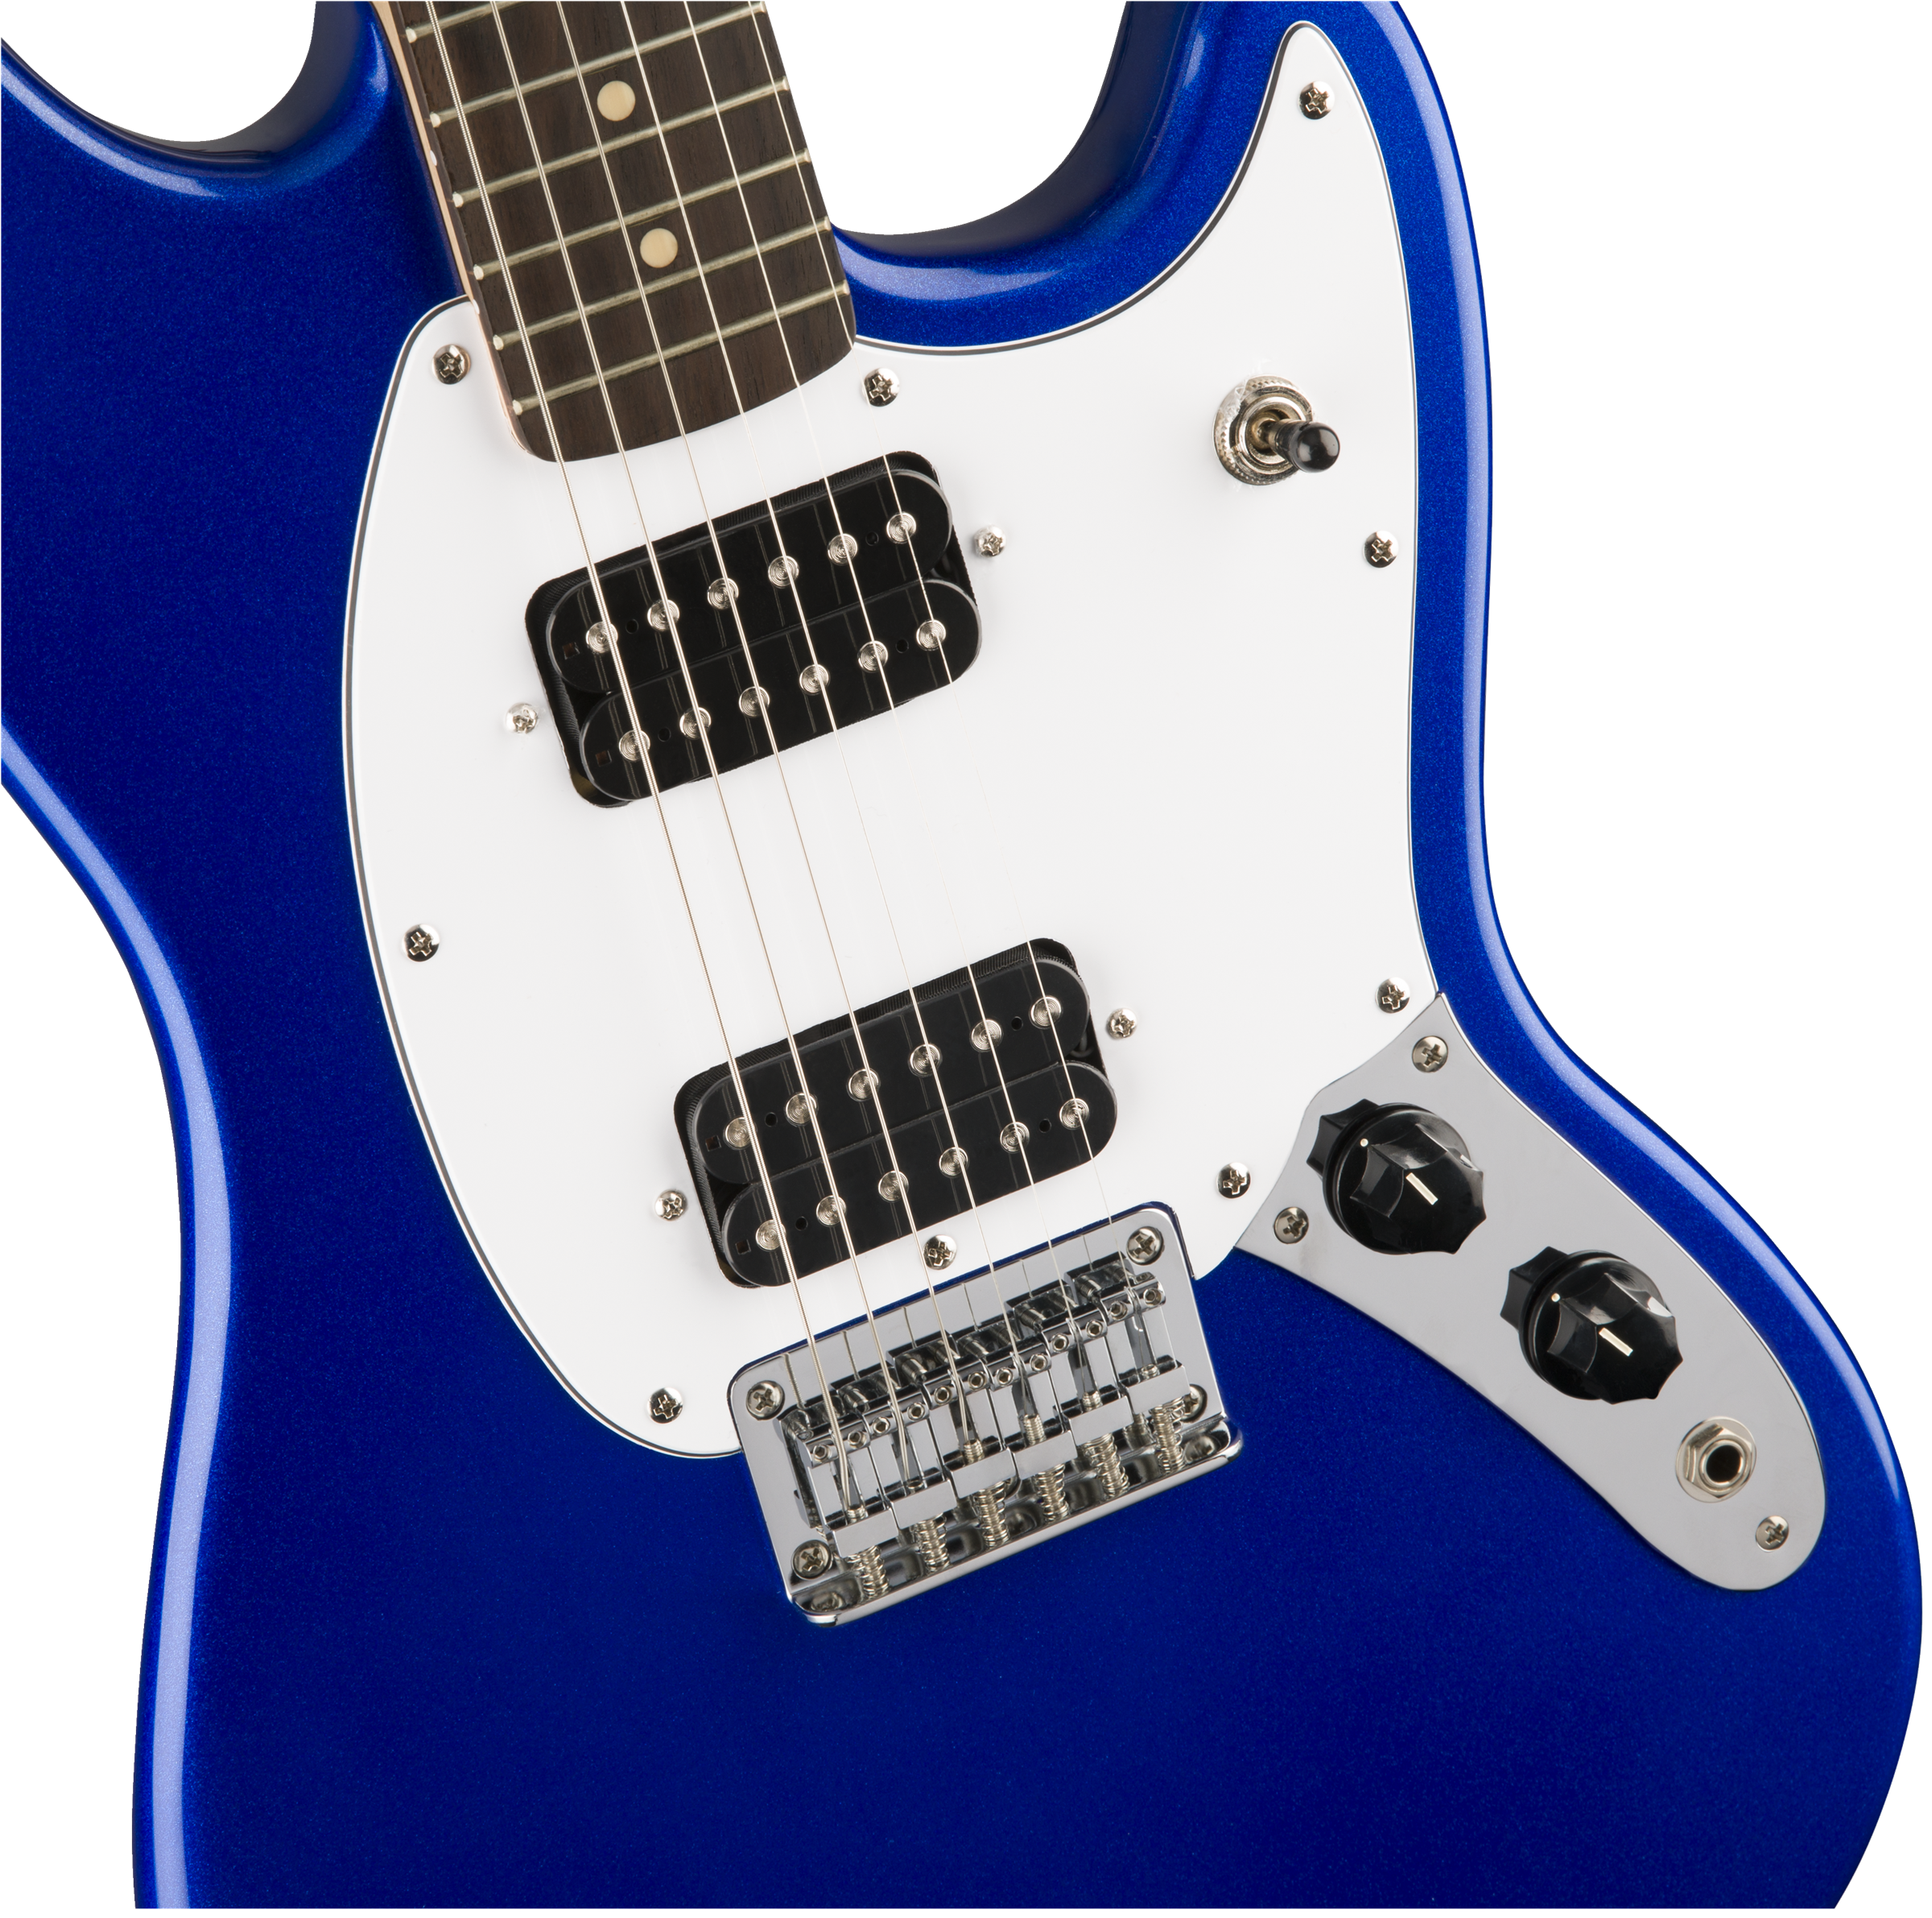 Squier Mustang Bullet Hh 2019 Ht Lau - Imperial Blue - Retro rock electric guitar - Variation 2